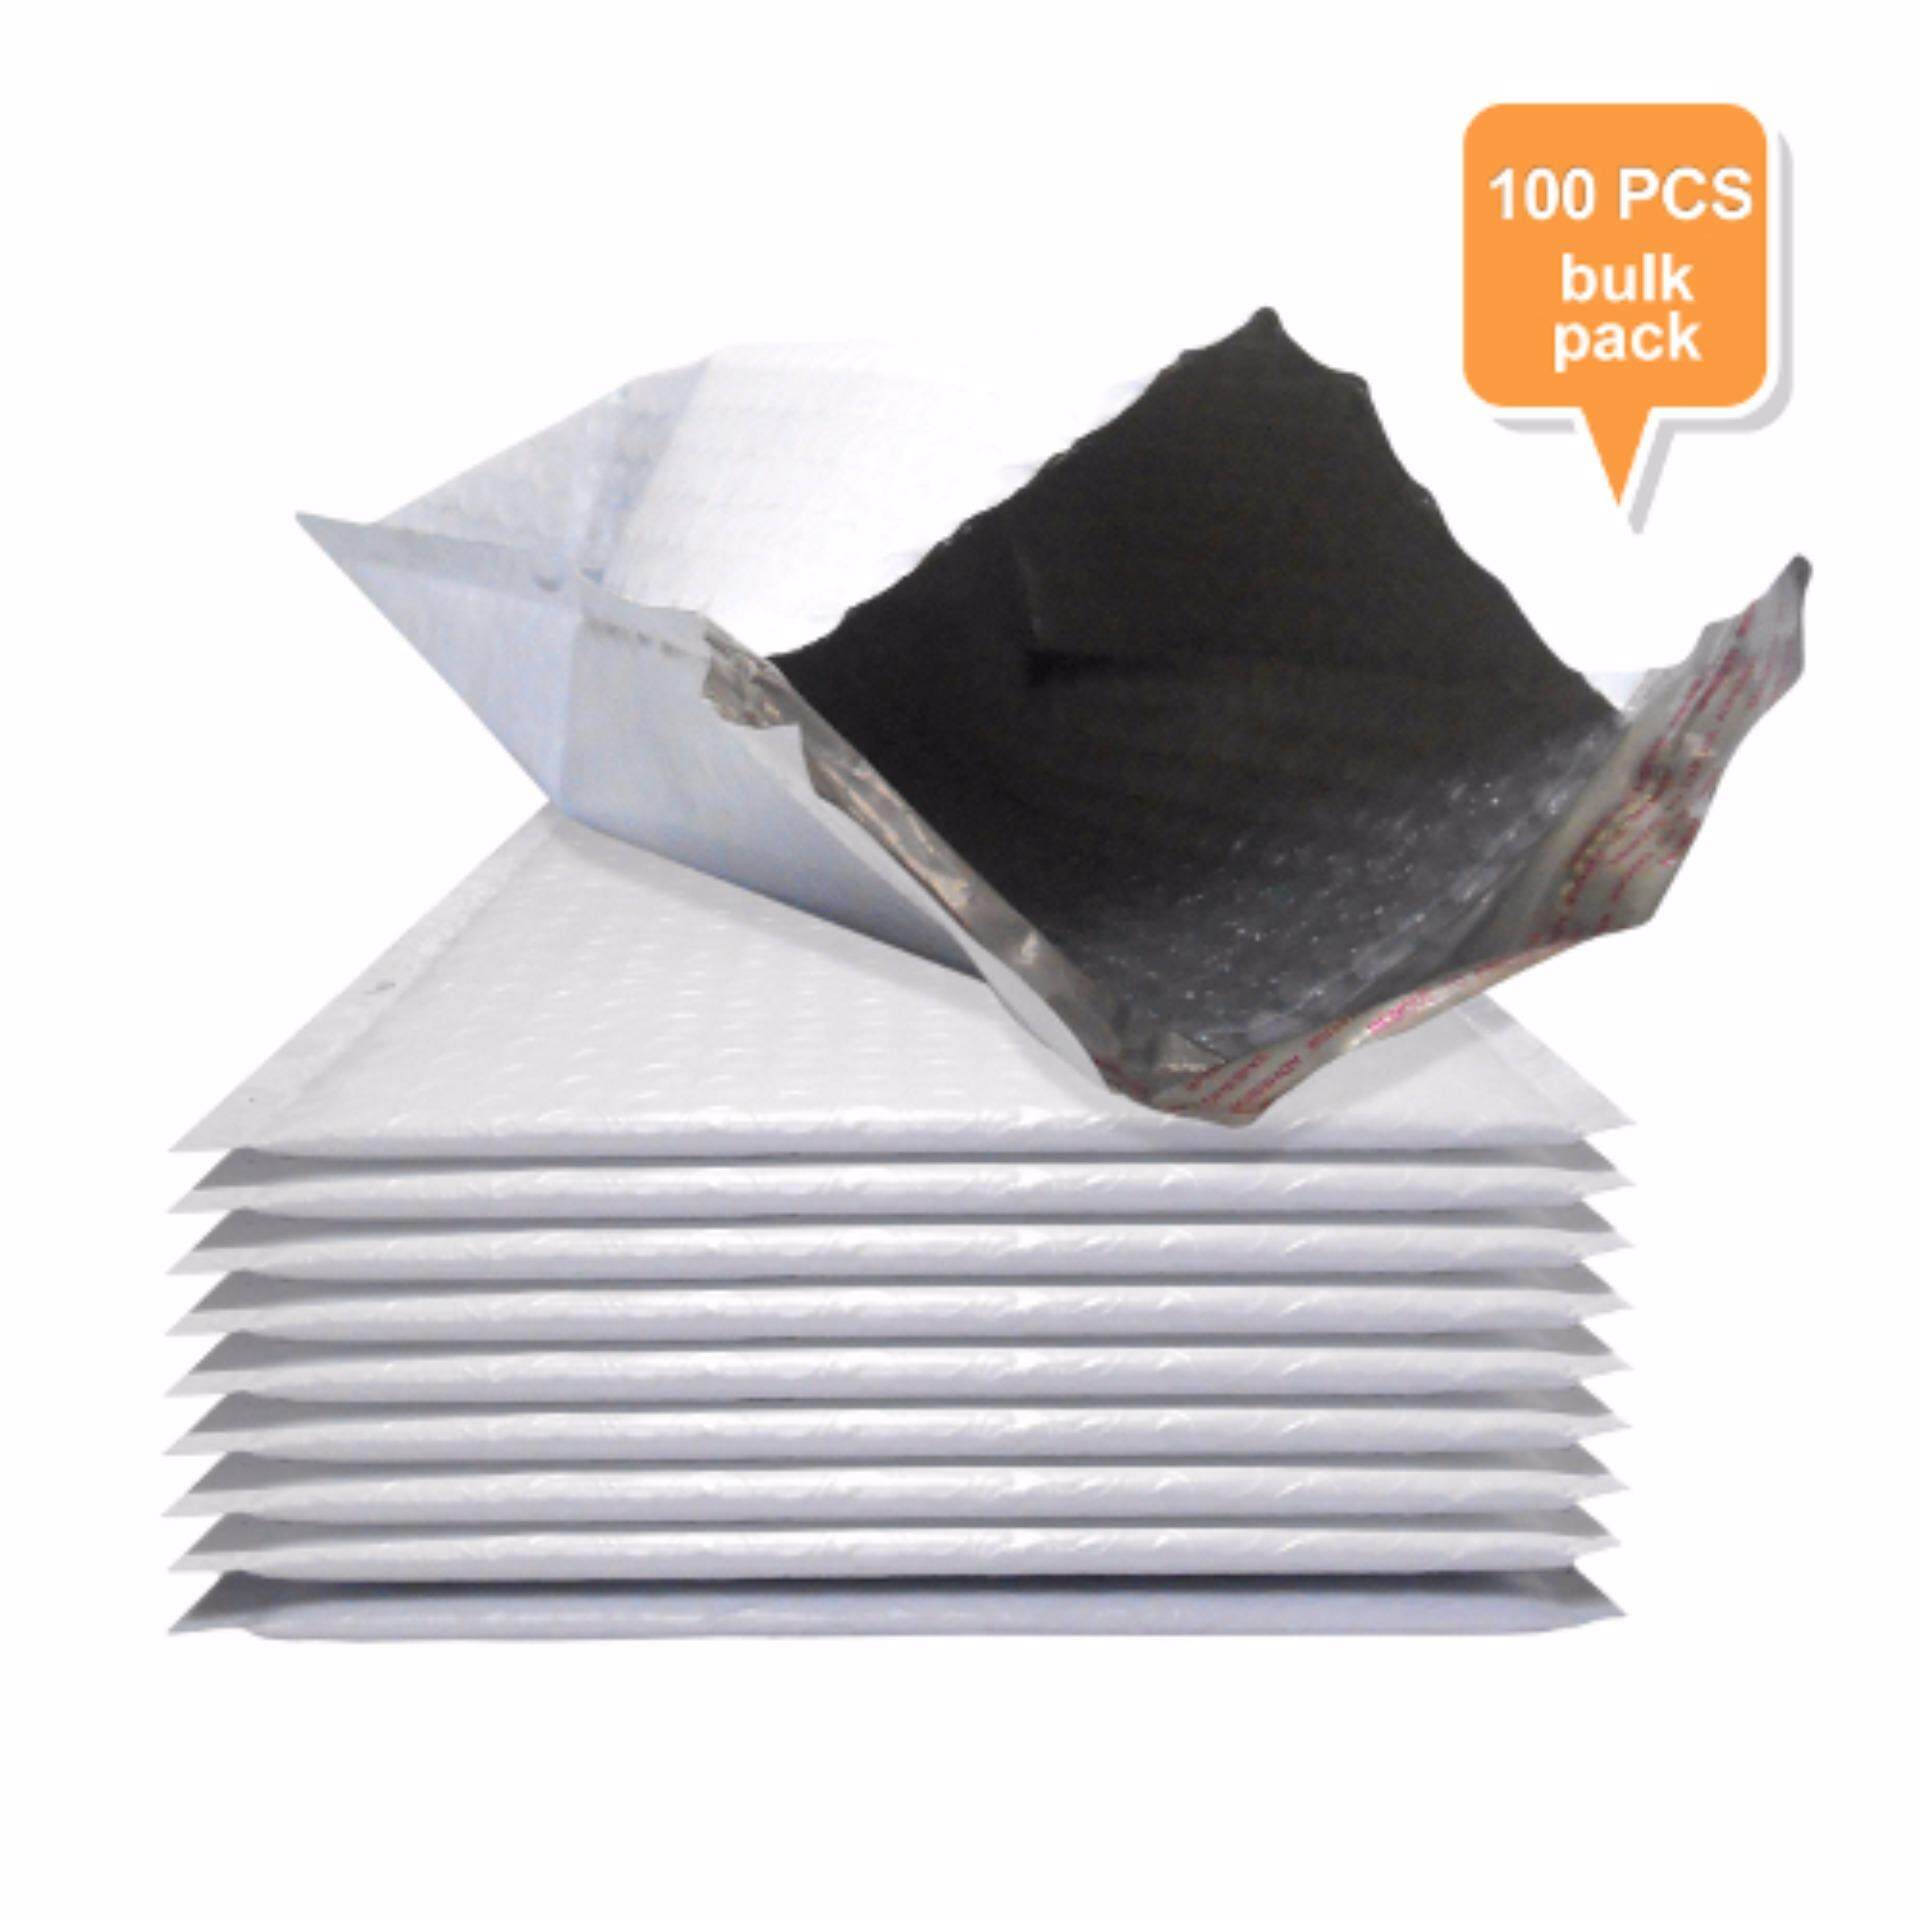 100pcs x Fullmark Polymailer Envelope with Bubble Wrap/ Padded Envelope (18*28.5cm)